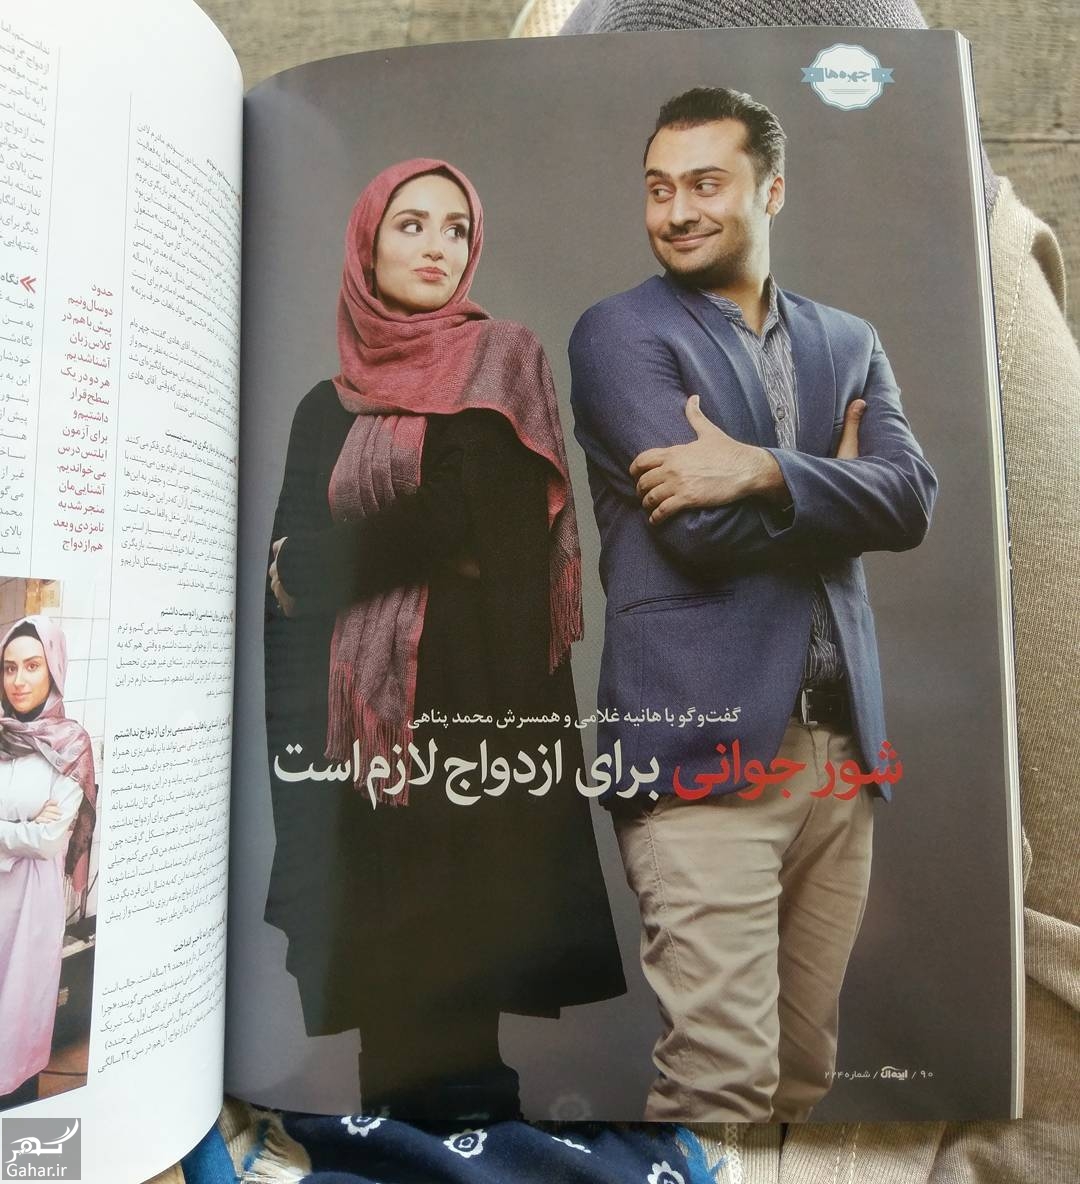 666051 Gahar ir عکس های جذاب هانیه غلامی و همسرش در مجله «ایده آل»